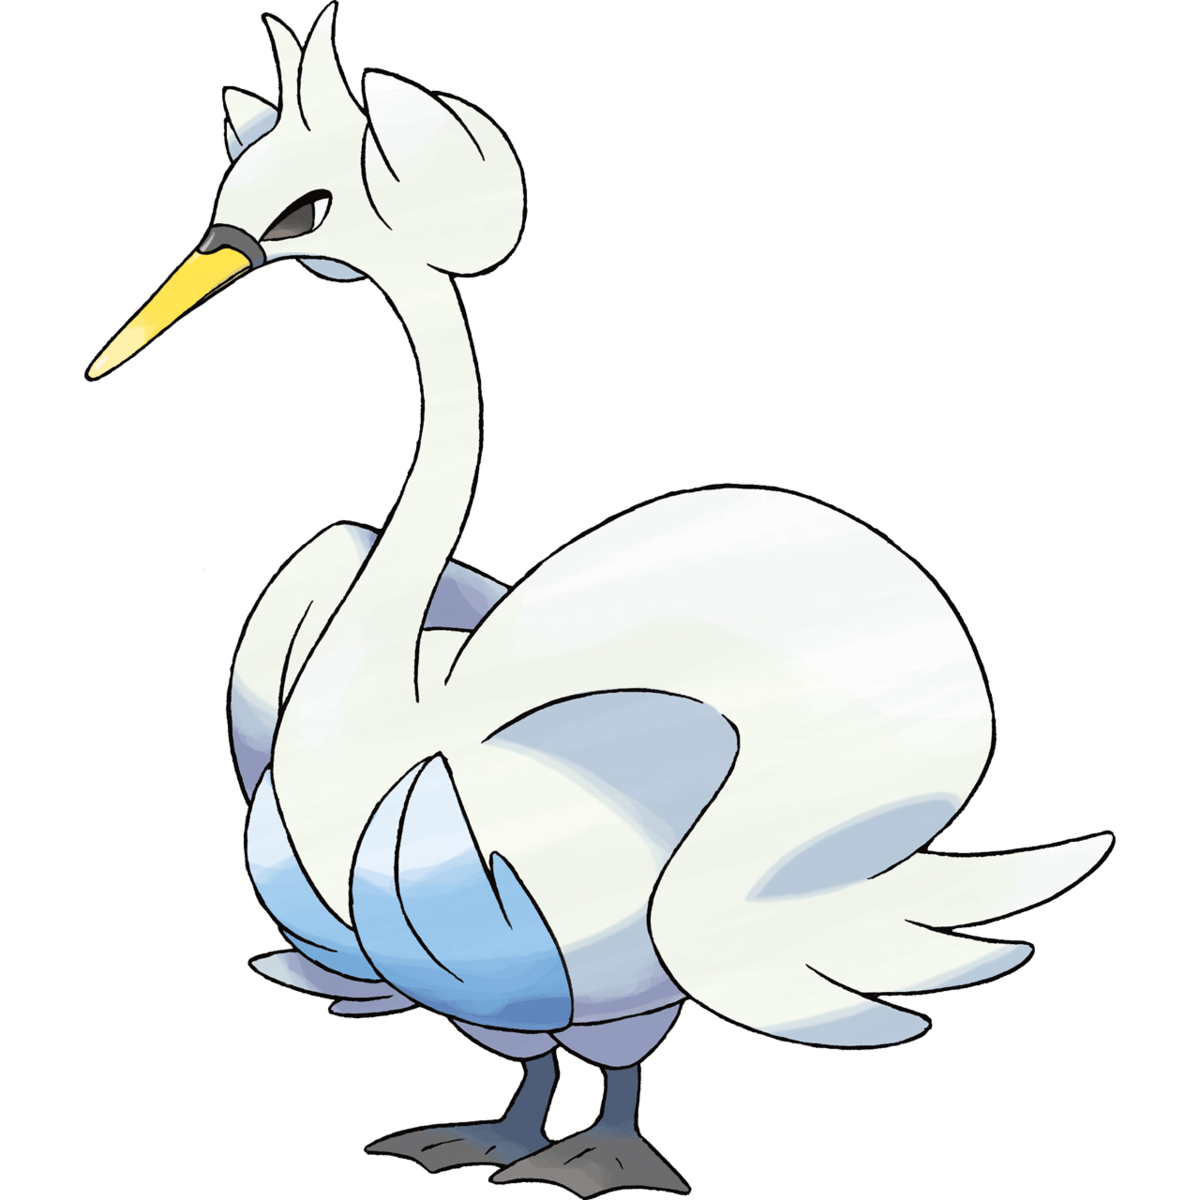 Swanna (Pokémon), The Community Driven Pokémon Encyclopedia